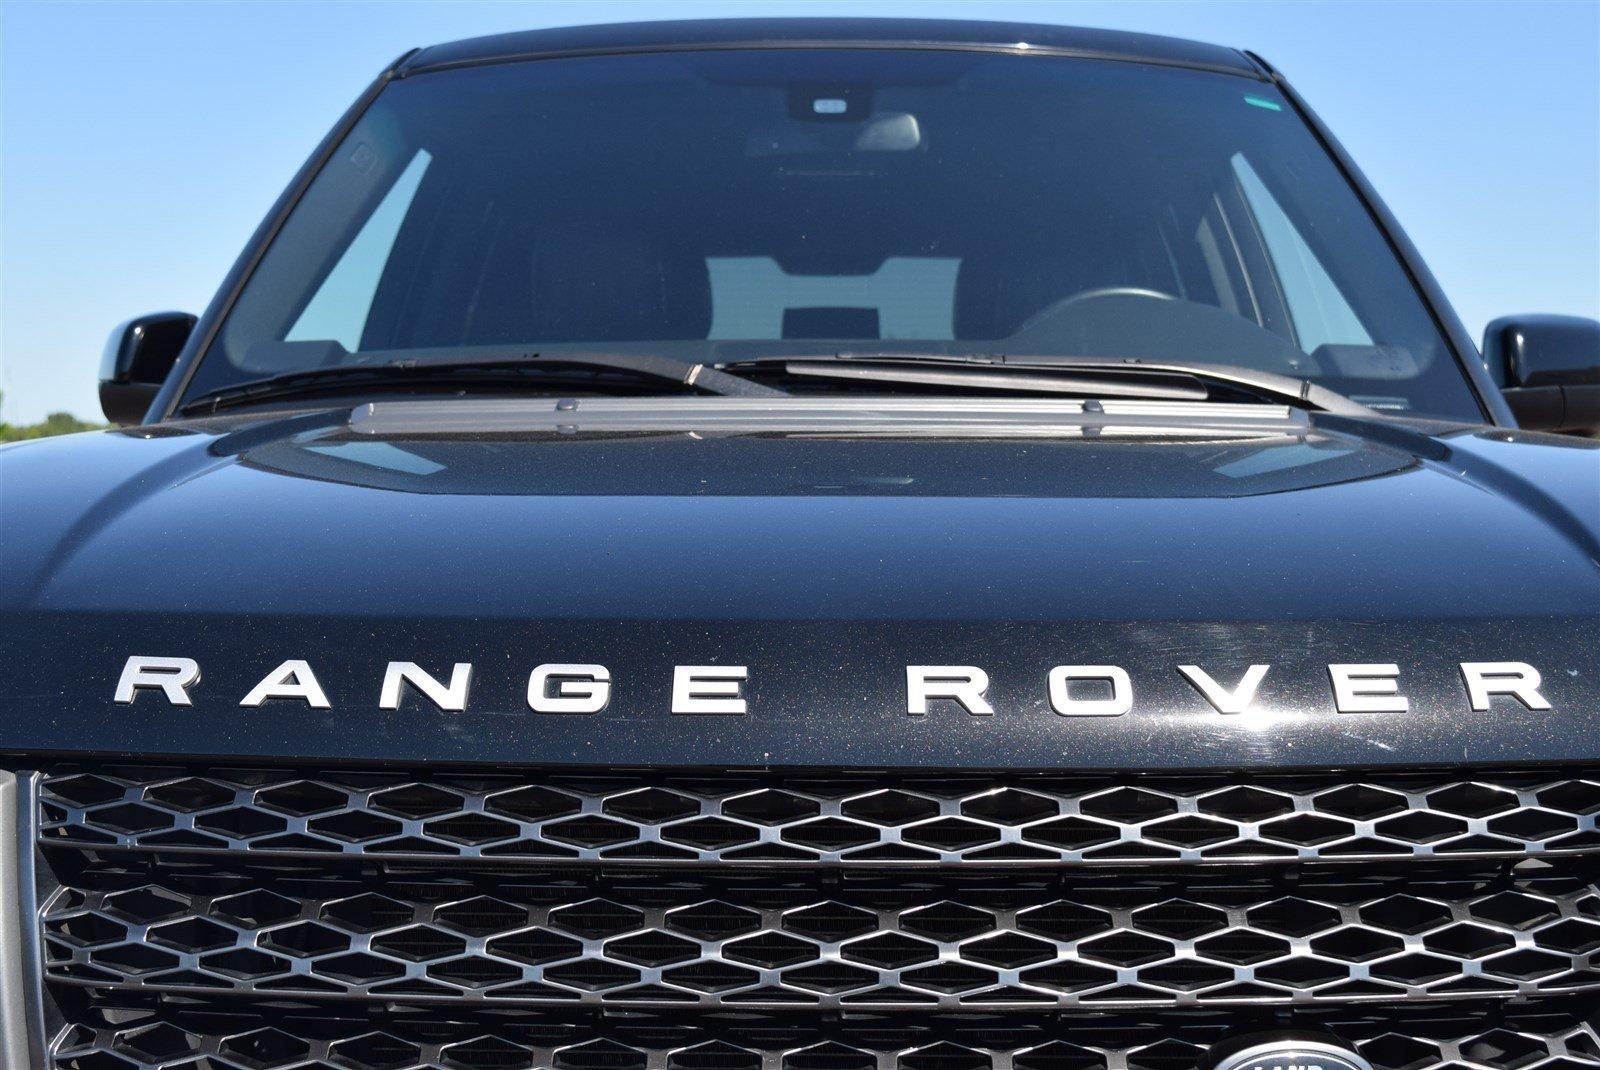 Used 2011 Land Rover Range Rover HSE LUX for sale Sold at Gravity Autos Marietta in Marietta GA 30060 4